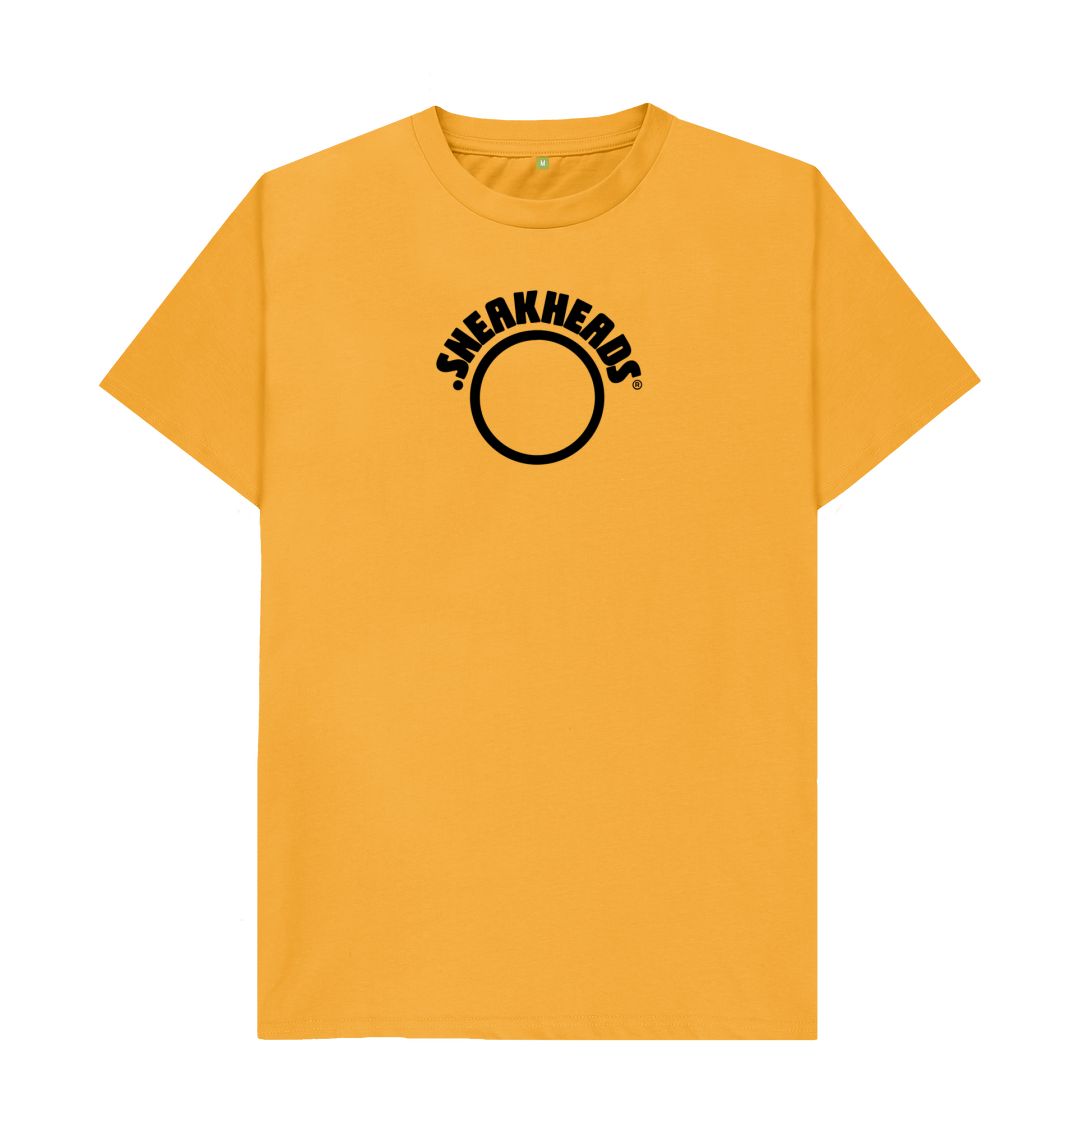 Mustard SneakHeads\u00ae Teemill t-shirt \u2013 large black logo